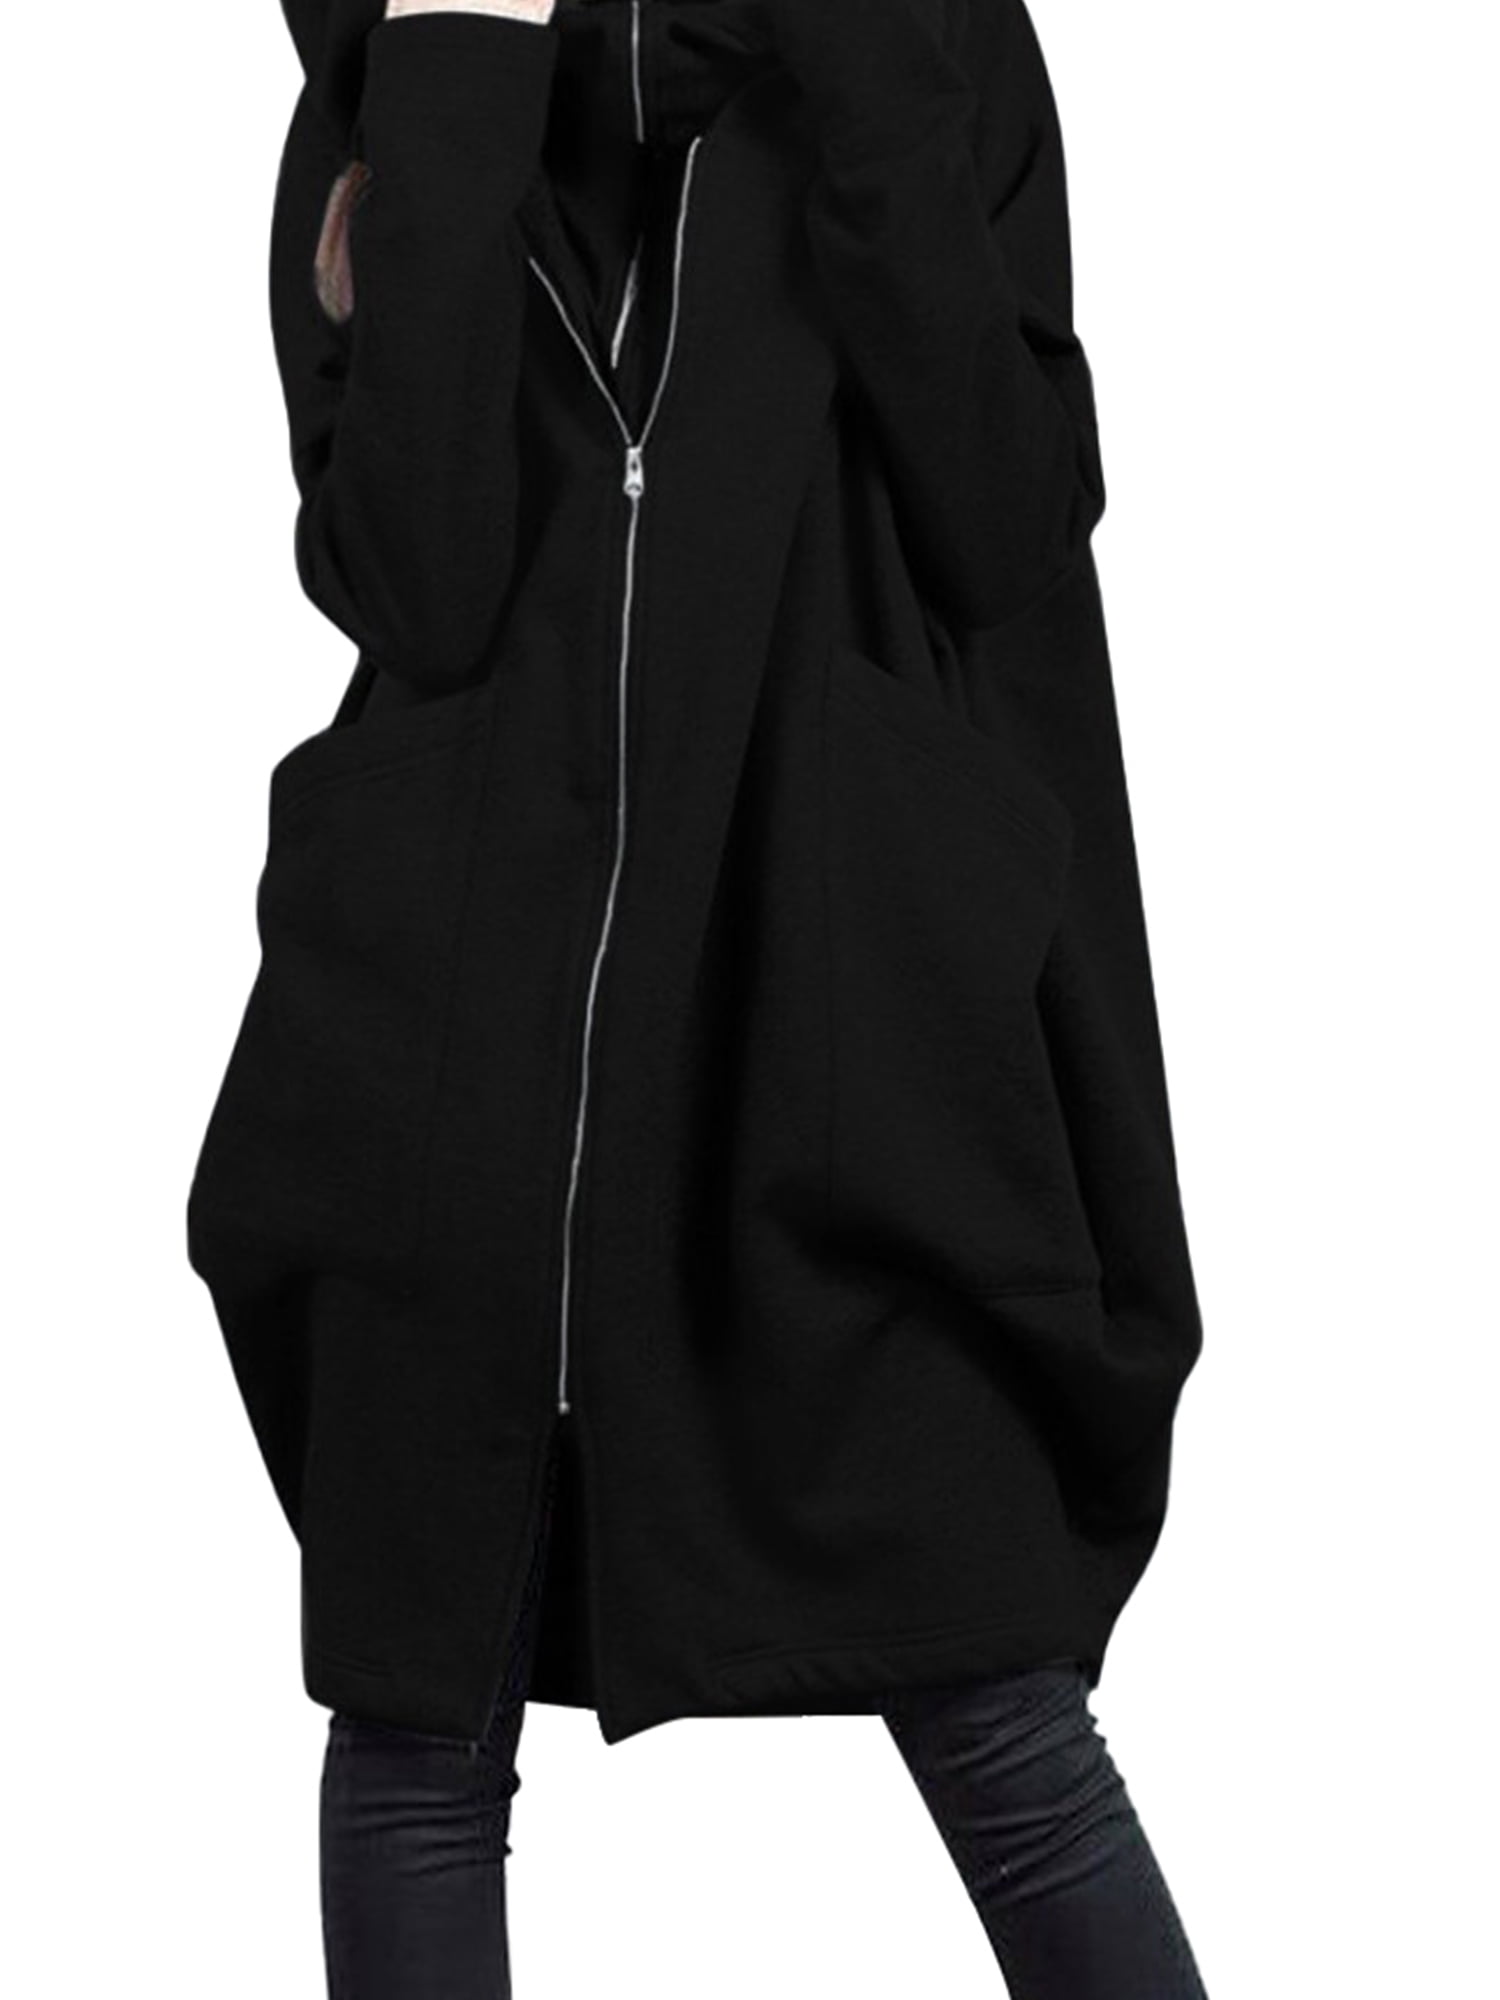 Women's Turtleneck Zipper Hooded Jacket with Pockets Solid Floral Color Block Sweatshirt Coats Long Sleeve Plus Size 